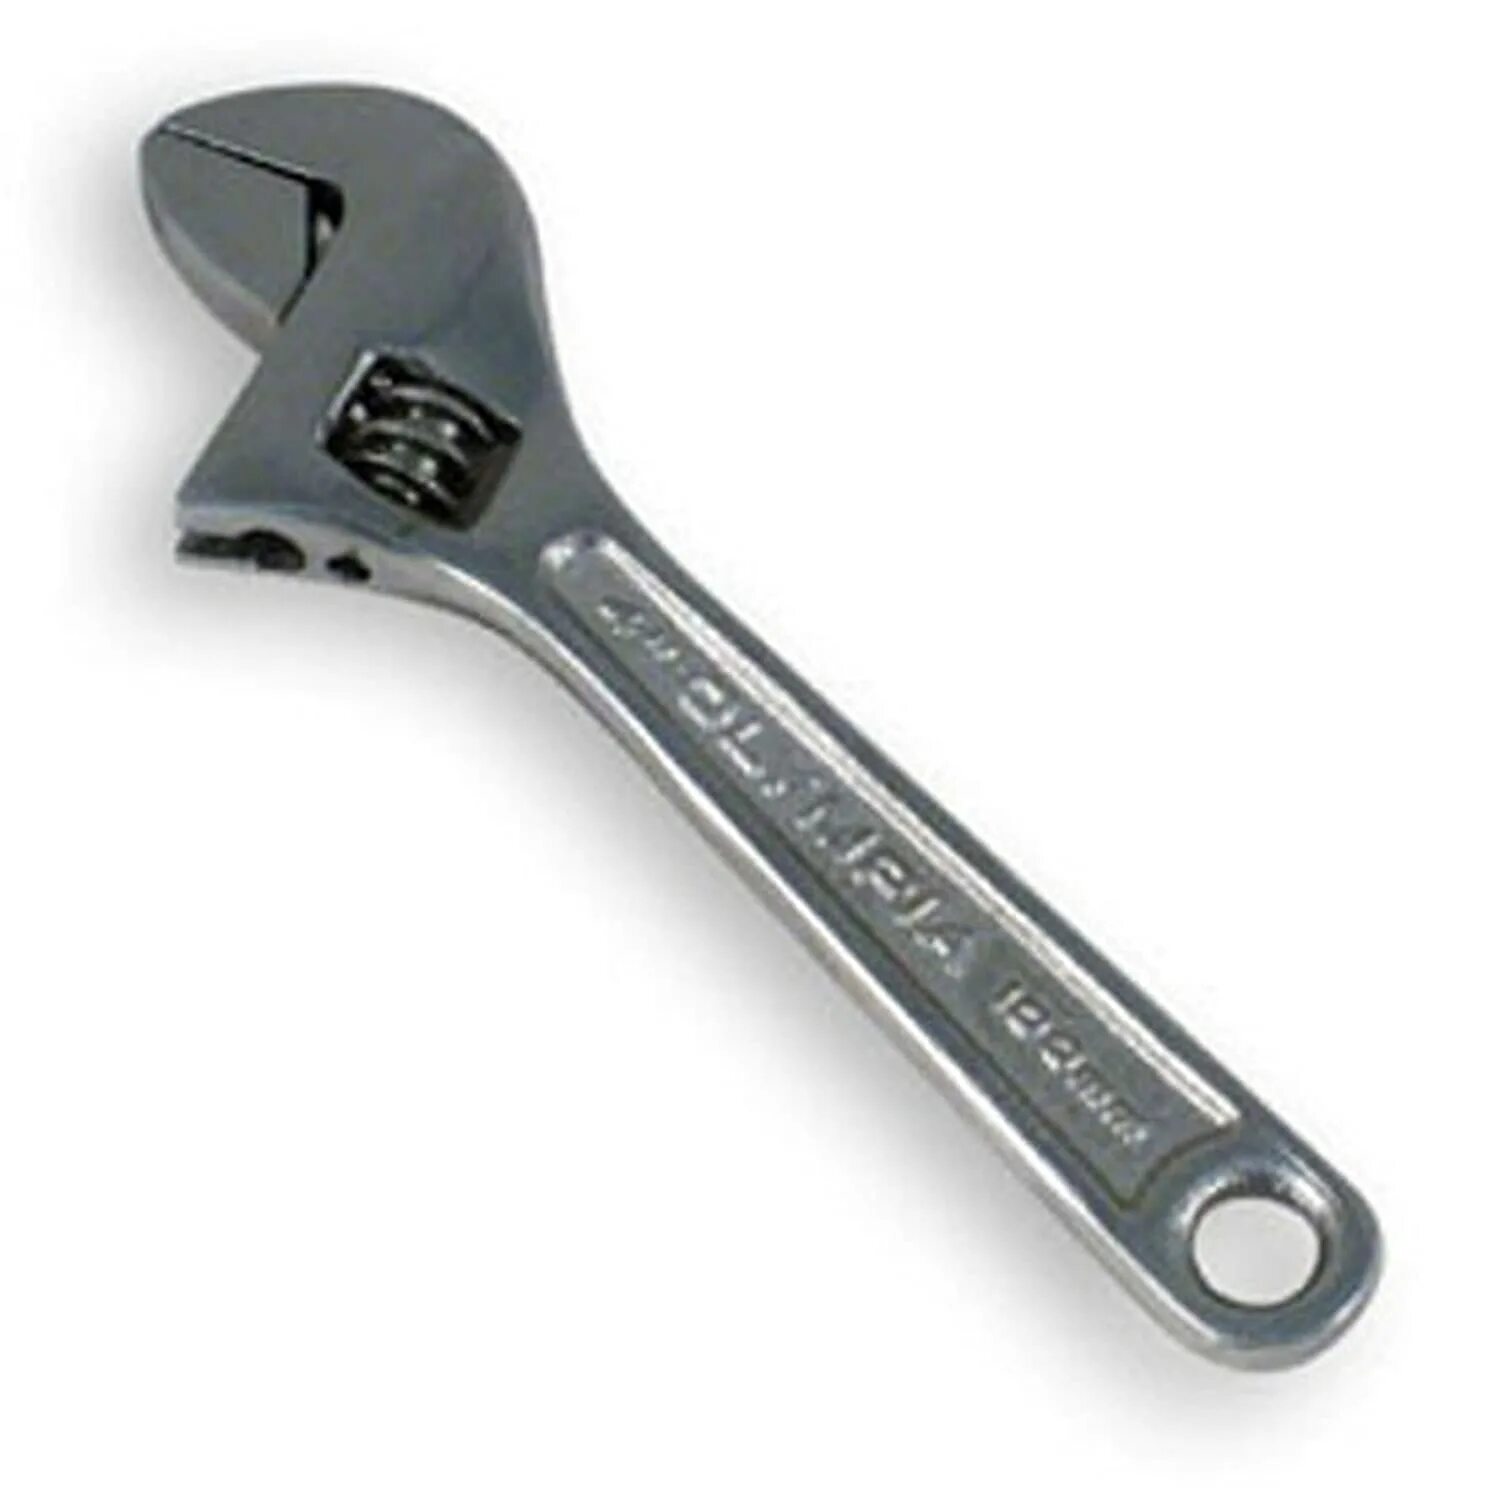 Wrench bl2000. Ключ разводной 15-375 Forged Steel. Wrench Chrome, 4 inch, #AP-4 Wi. Мультитул Wrench Kamaru. Tool 1